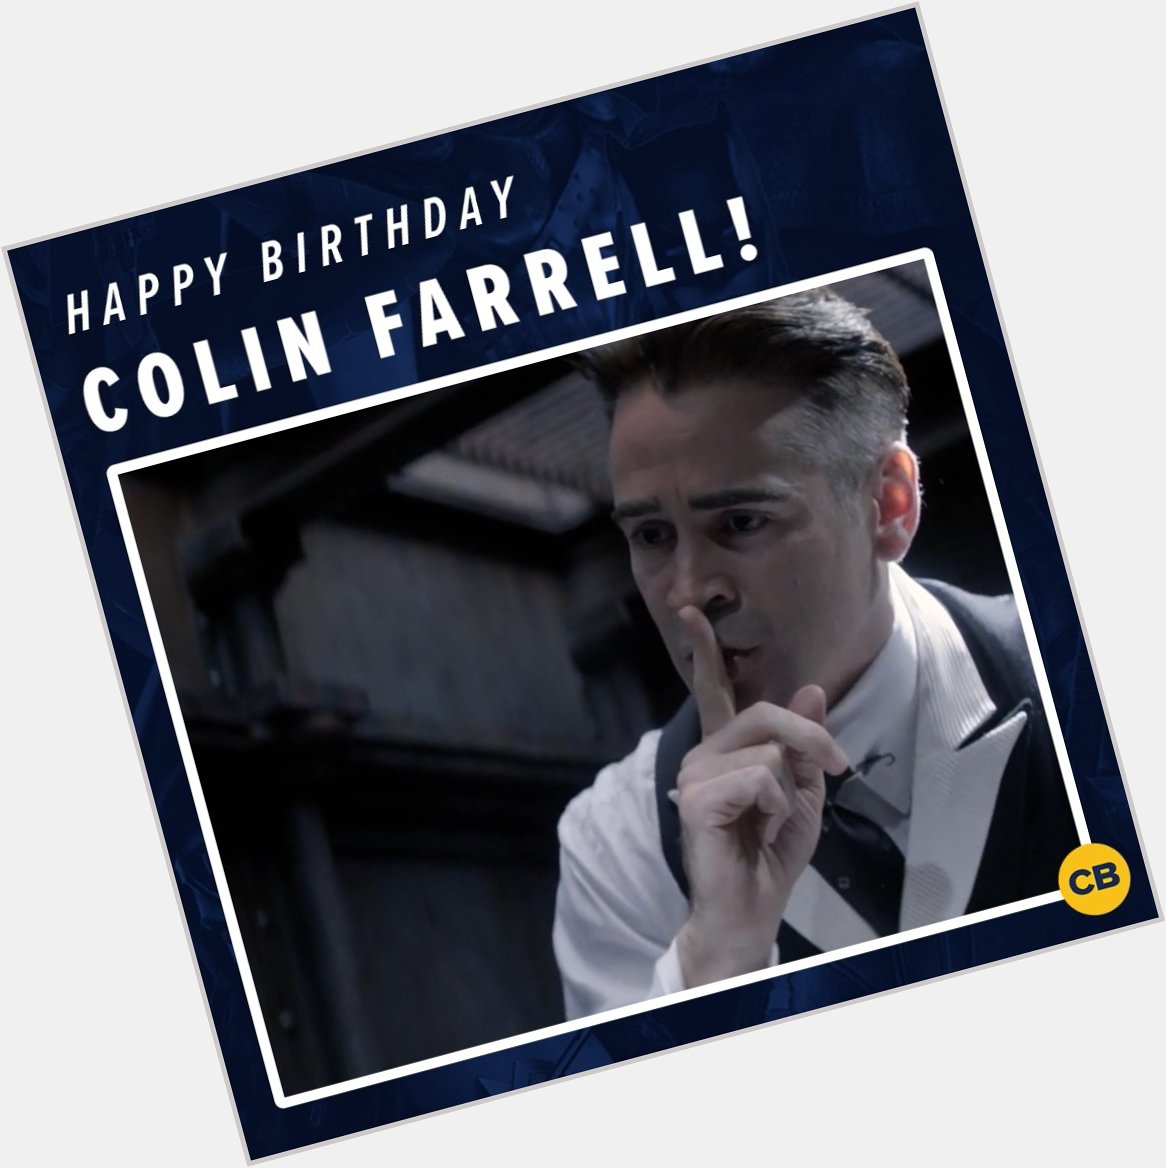 Happy birthday to \Fantastic Beasts\ star, Colin Farrell! 